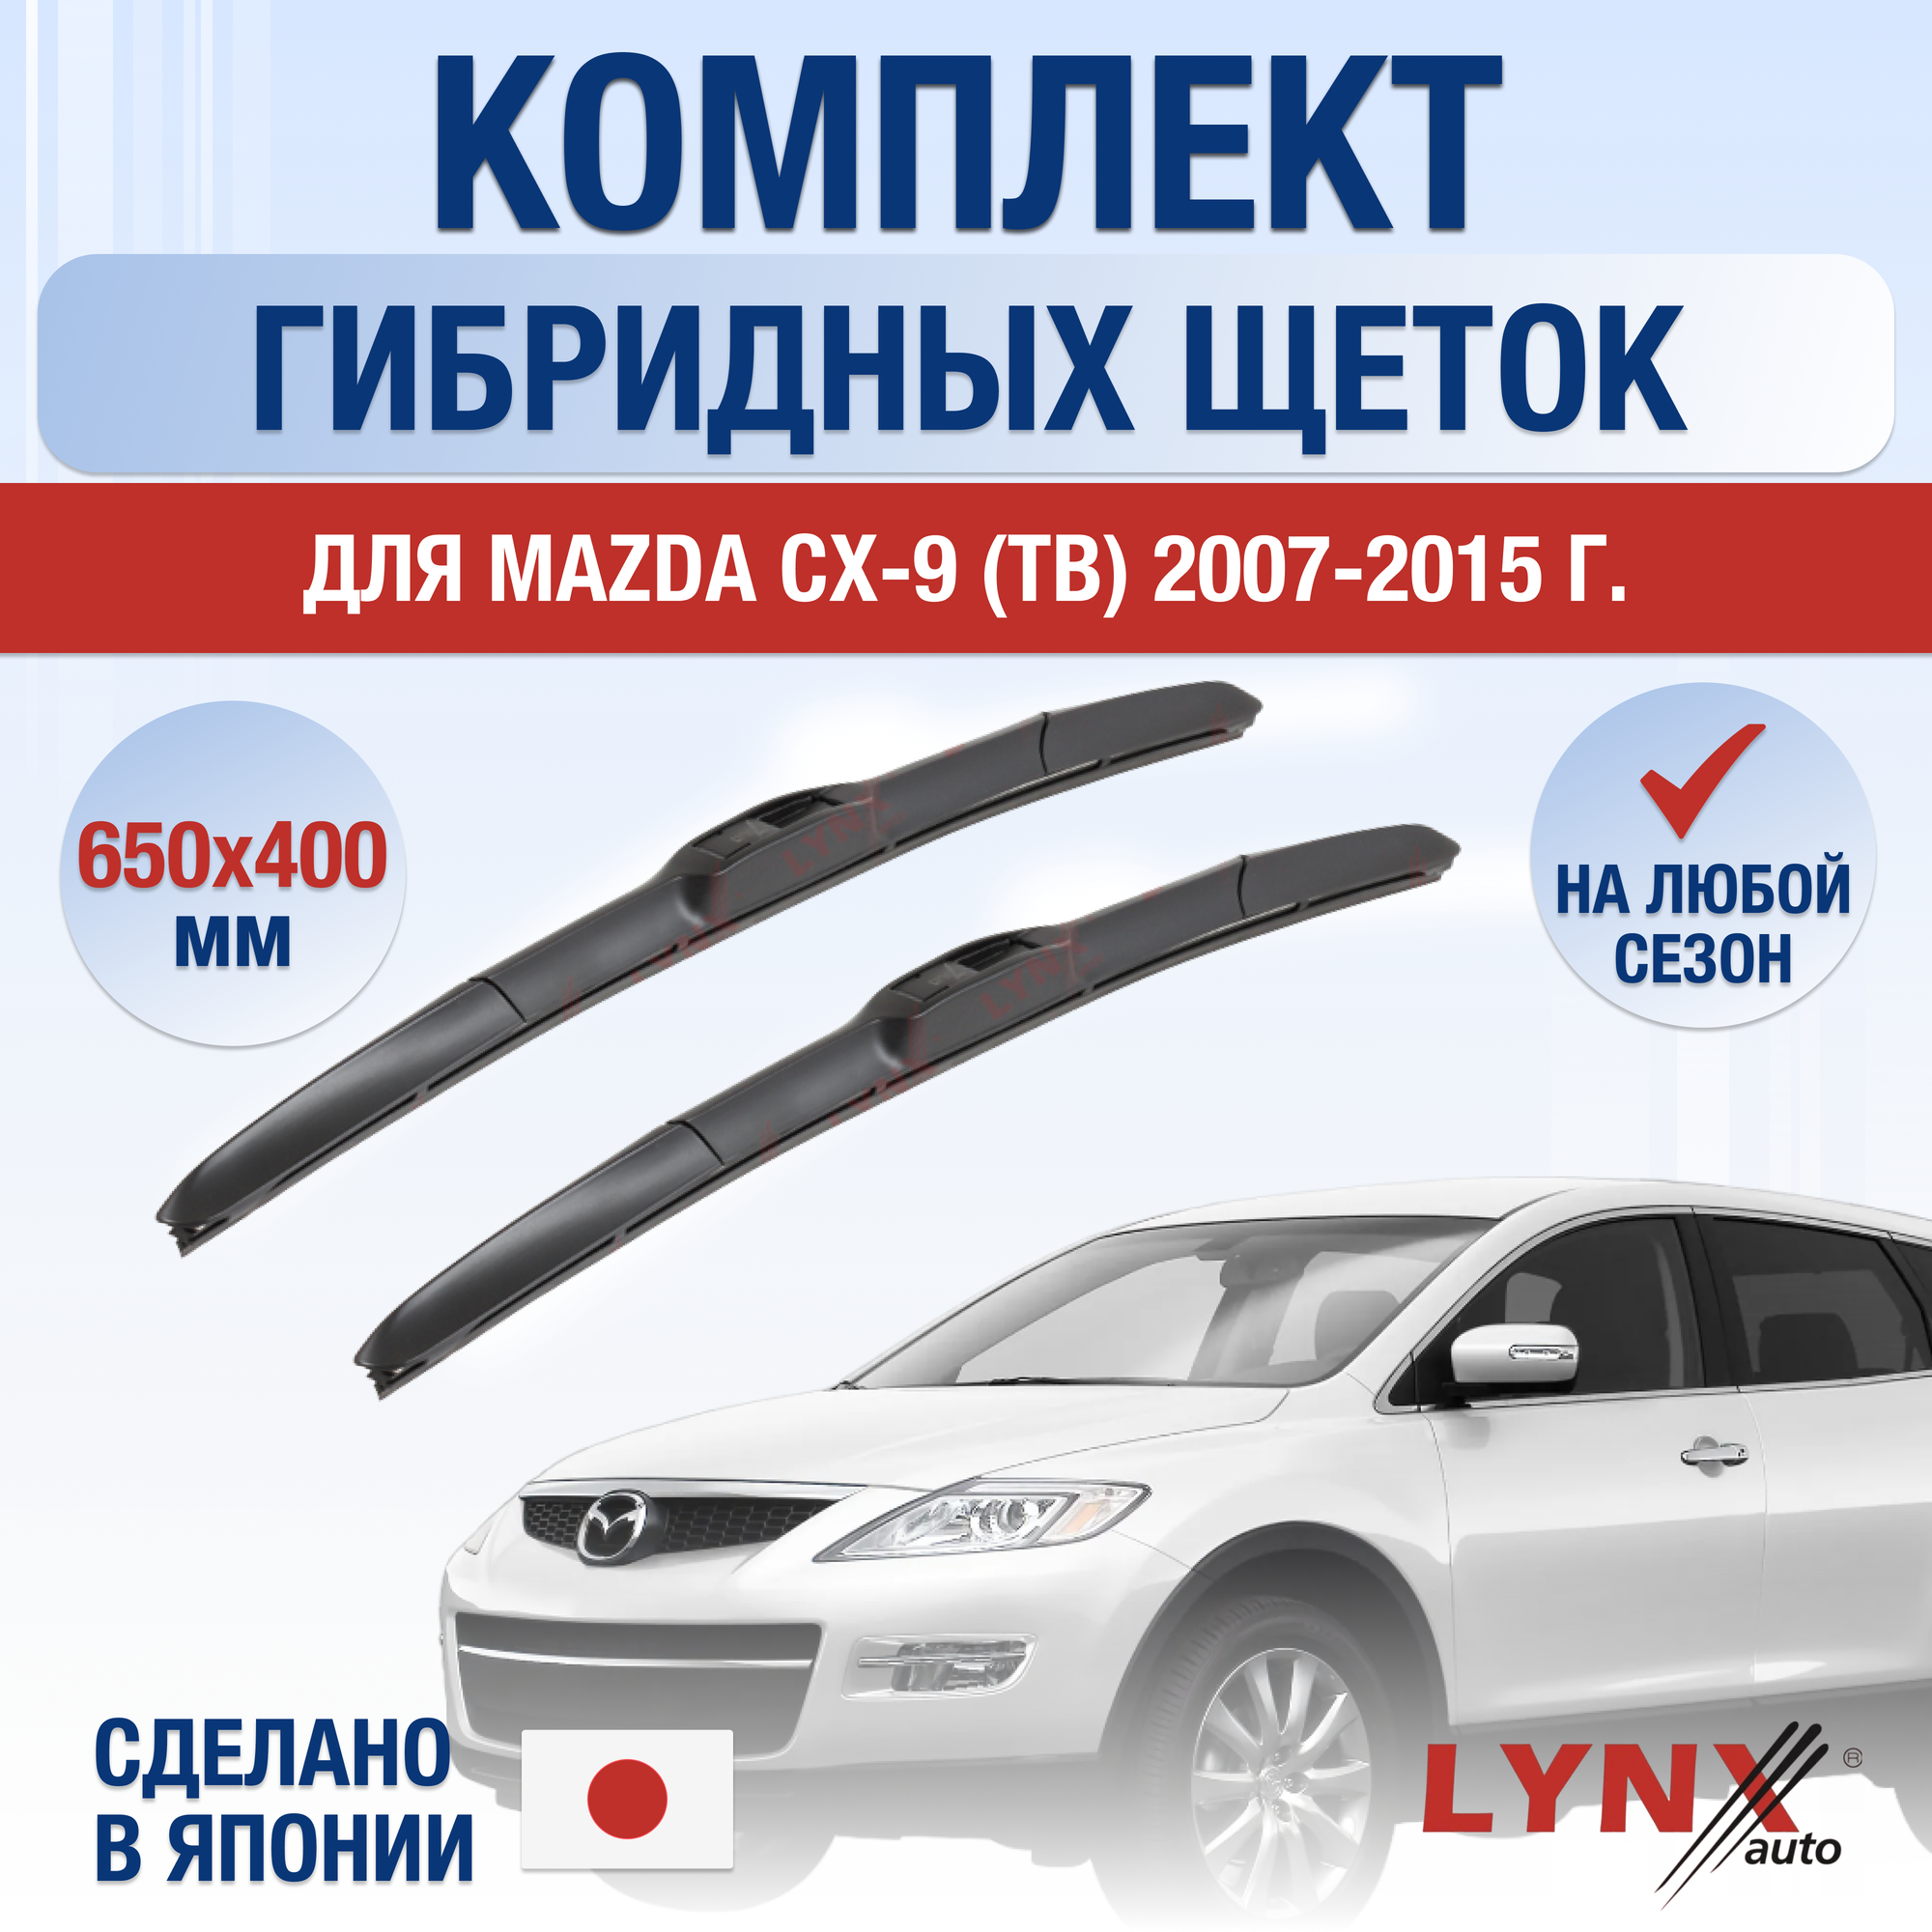 Щетки стеклоочистителя для Mazda CX-9 1 (TB) / 2007 2008 2009 2010 2011 2012 2013 2014 2015 / Комплект гибридных дворников 650 400 мм Мазда СХ-9